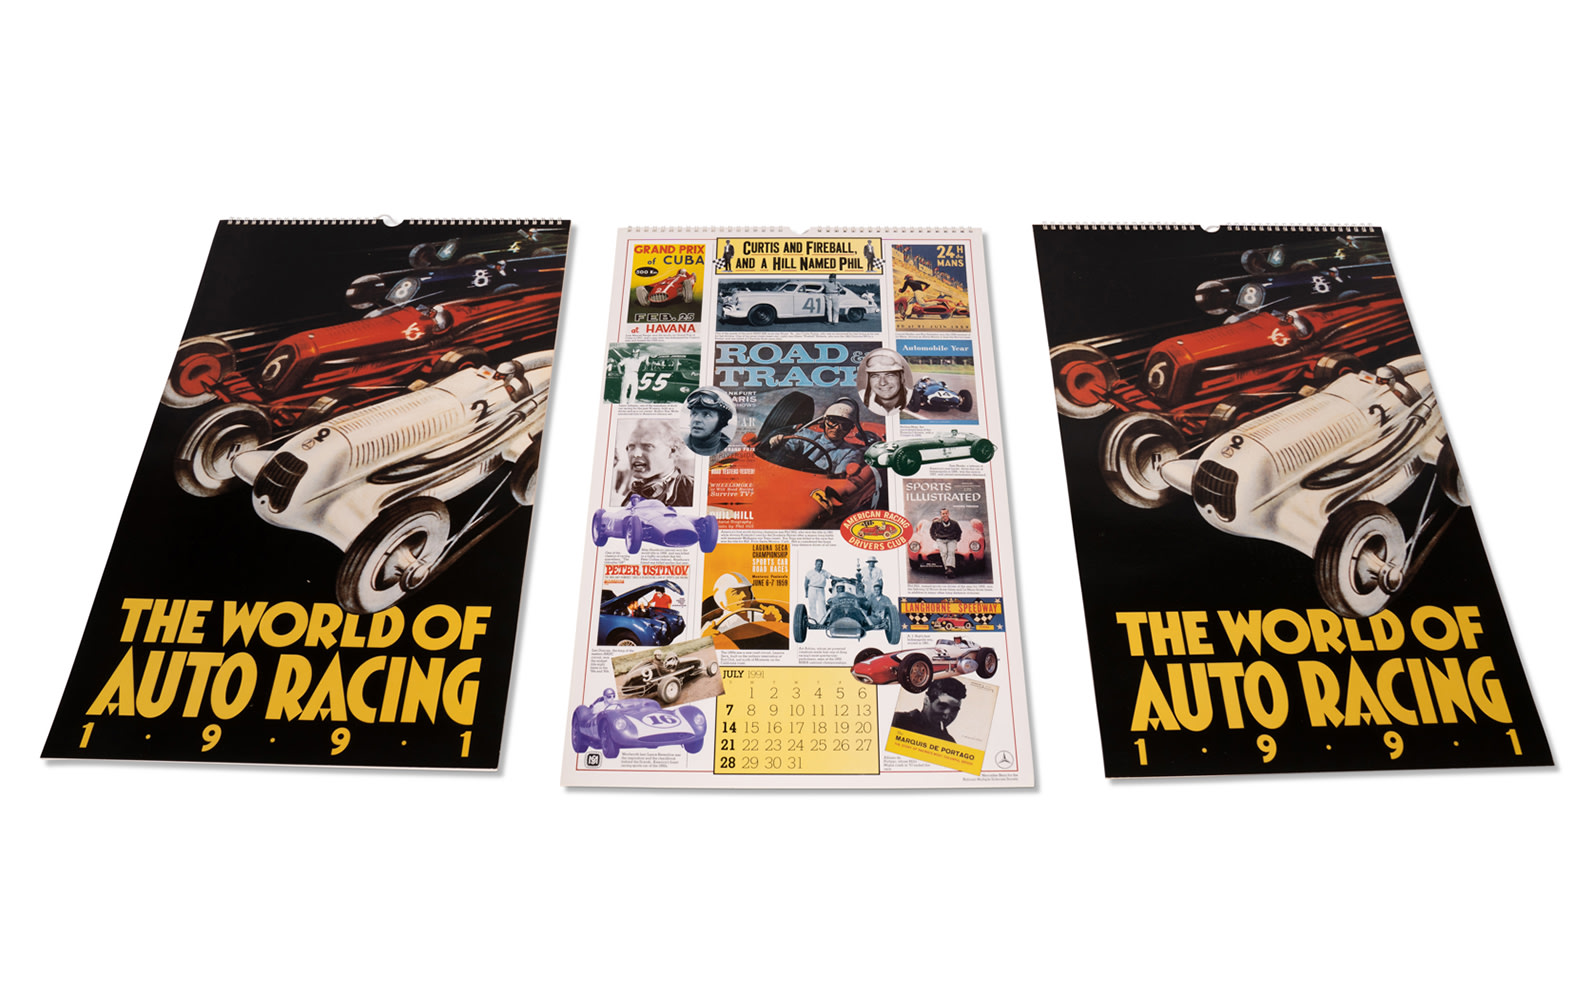 Two Sets of Mercedes-Benz Commemorative Prints and Three 1991 Mercedes-Benz Factory Calendars